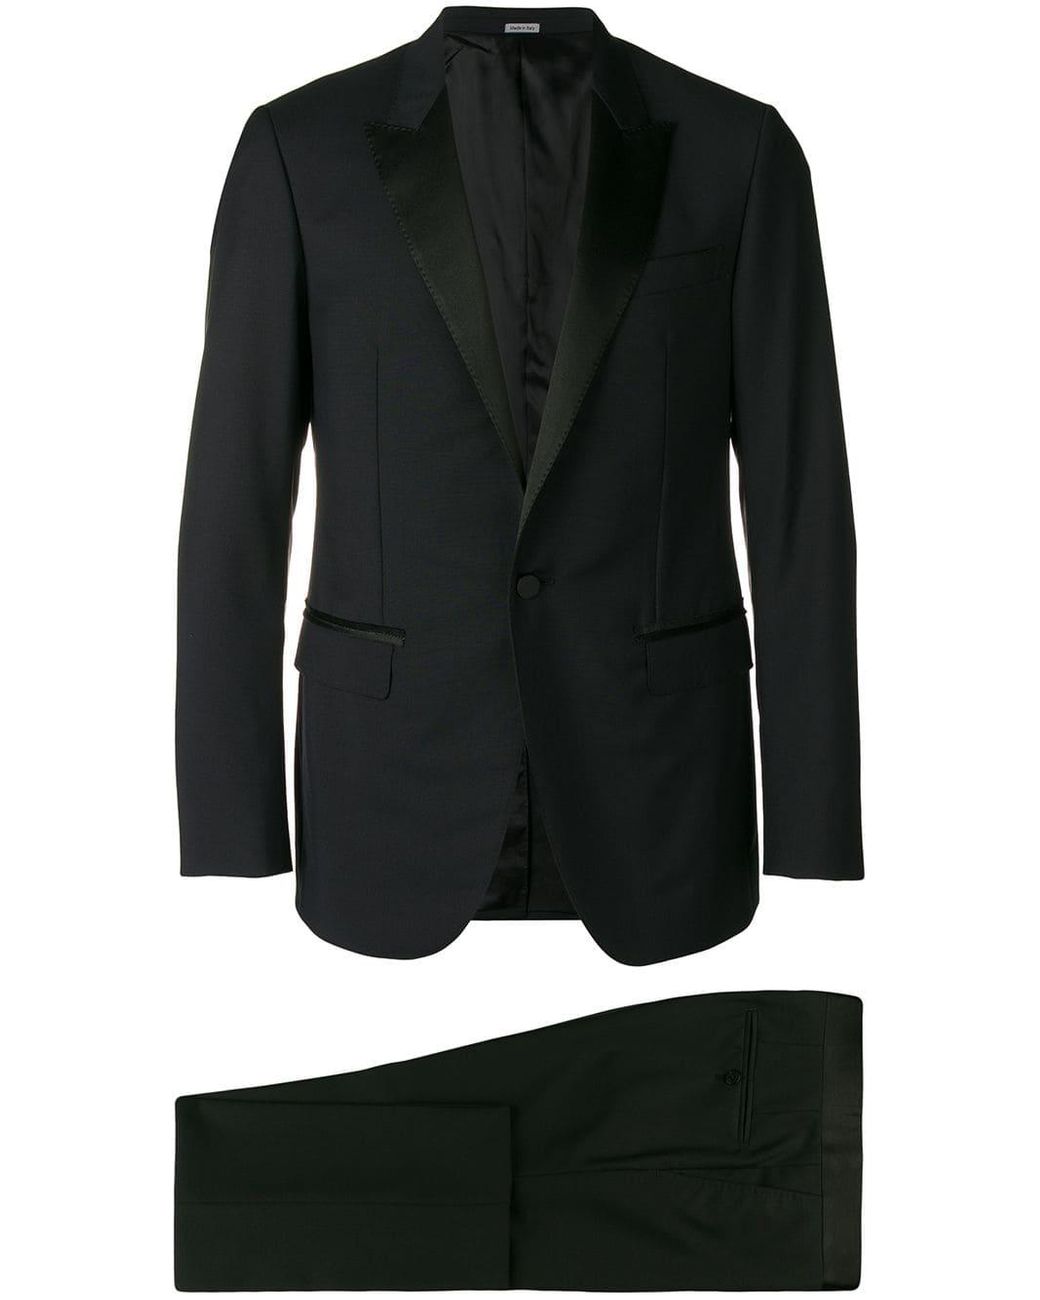 Lanvin Wool Formal Two-piece Suit in Blue for Men - Lyst